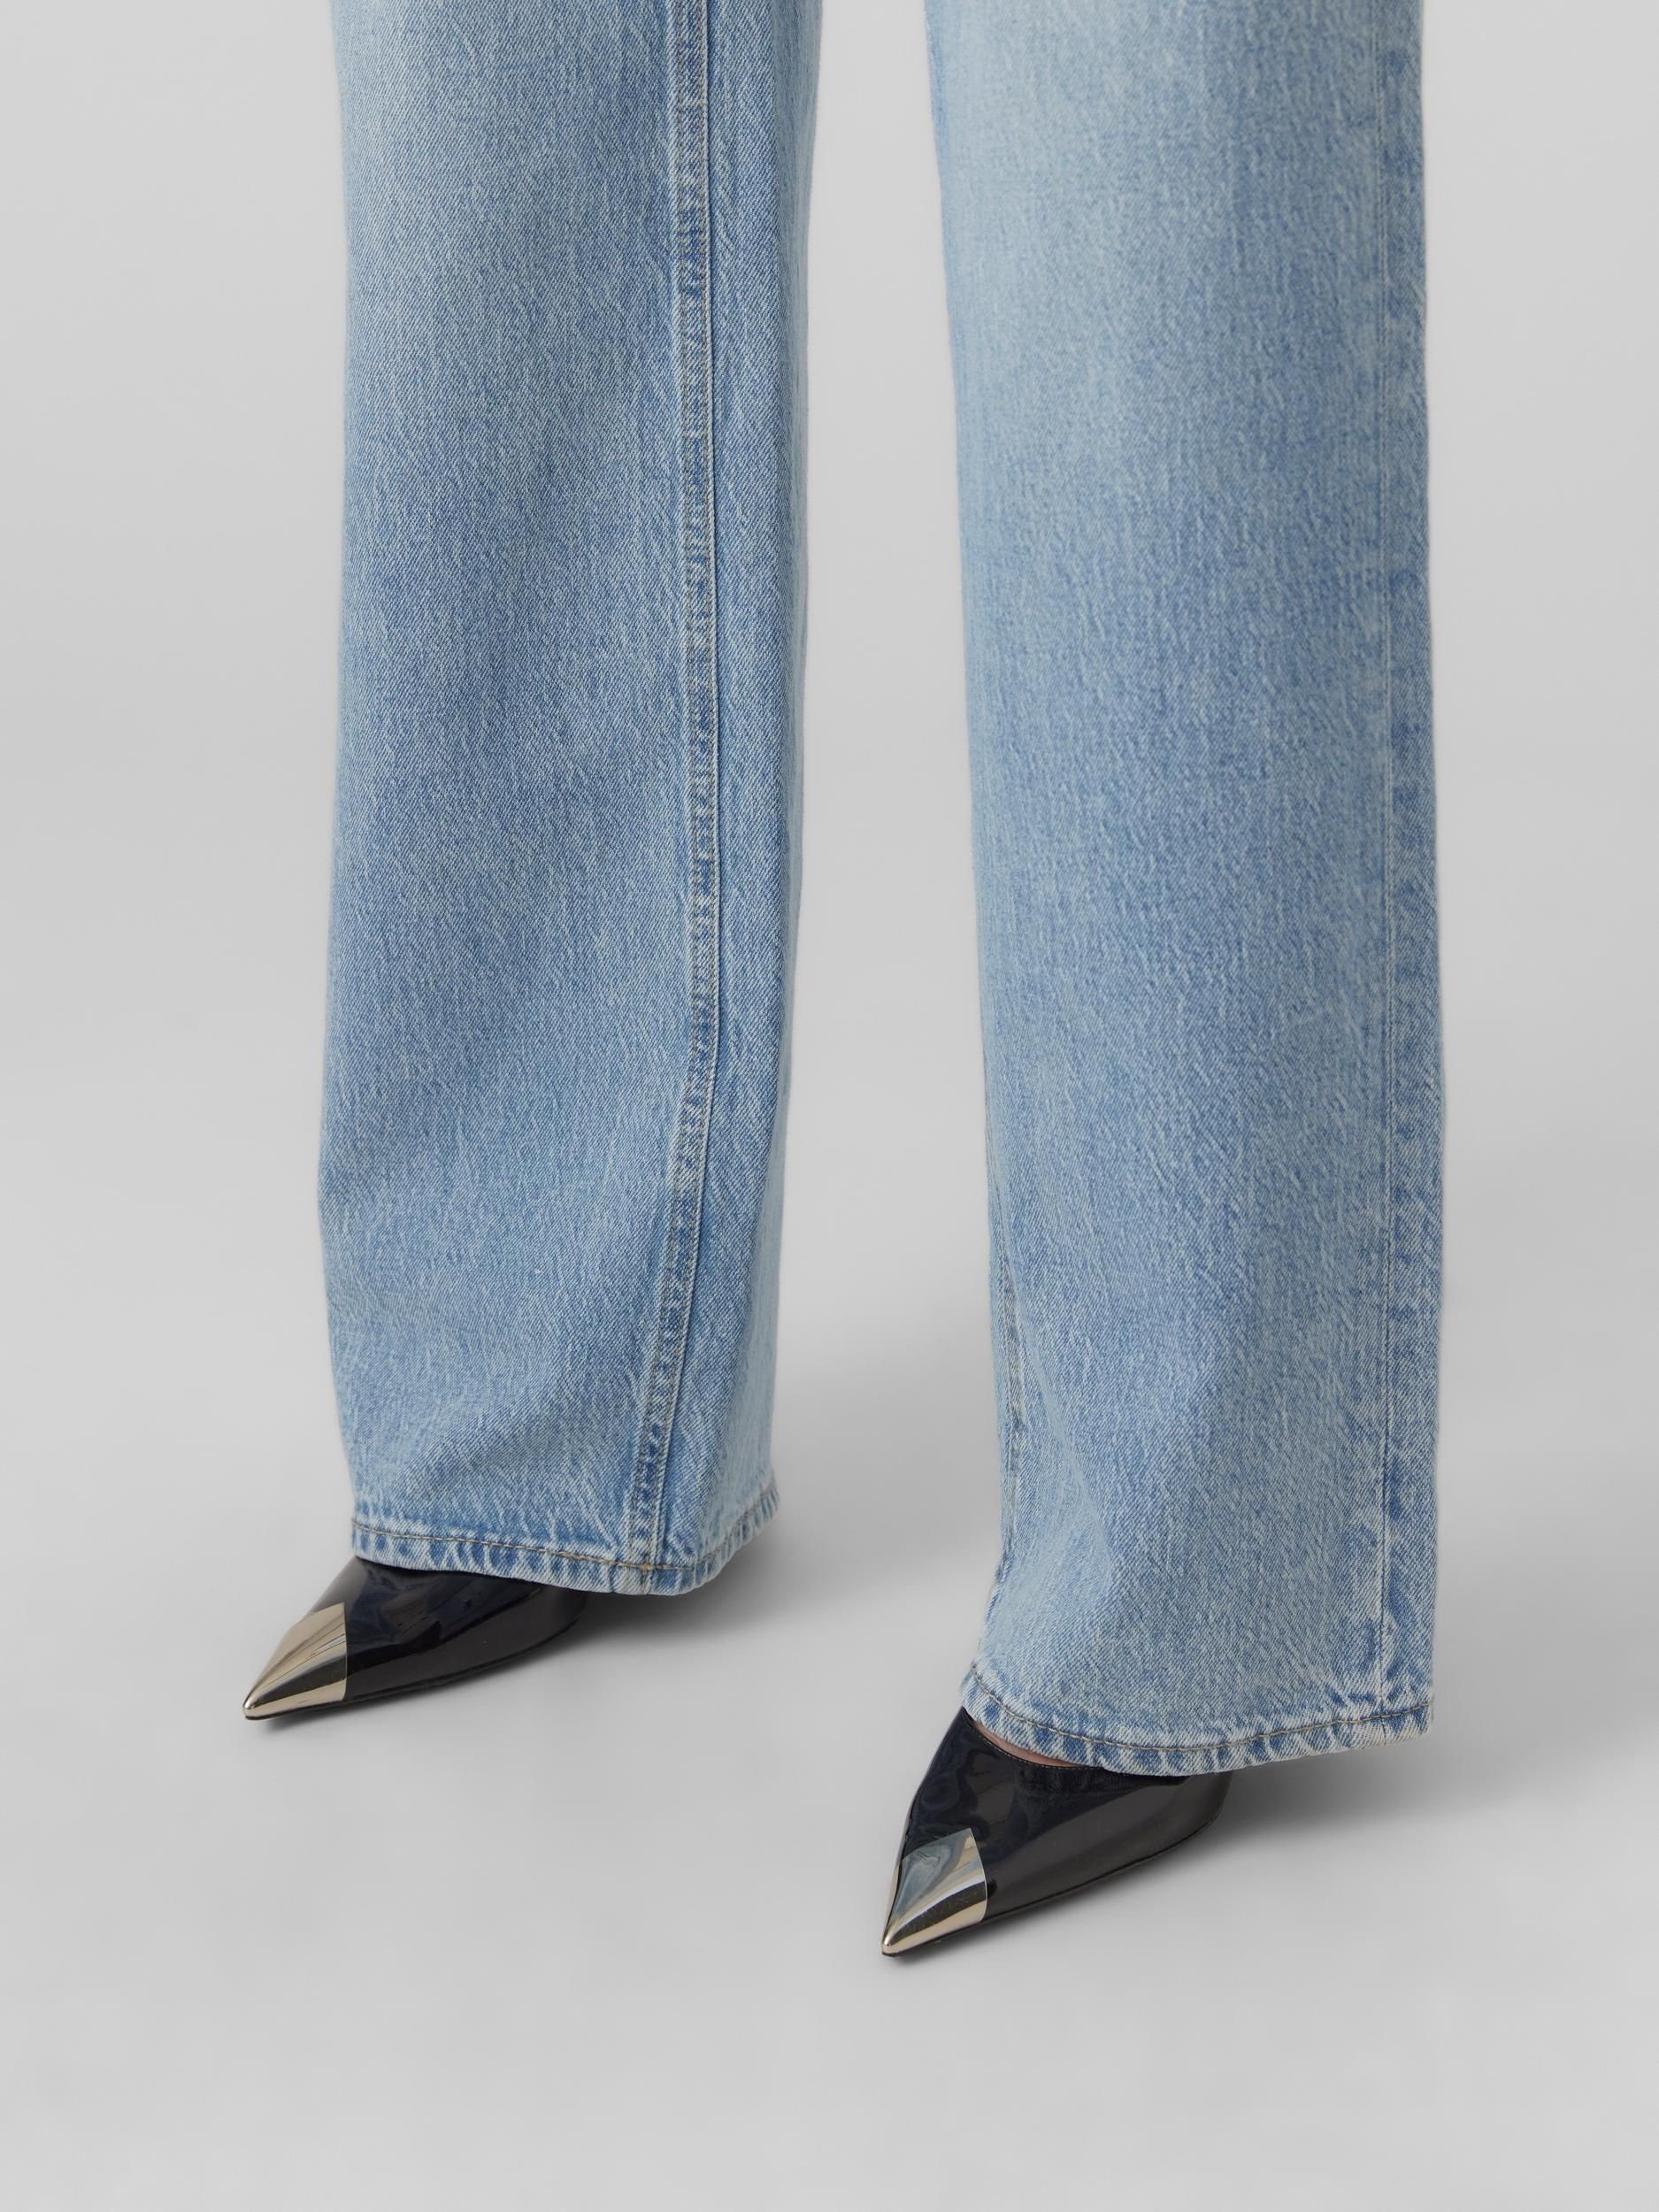 Moda Vero Slim-fit-Jeans